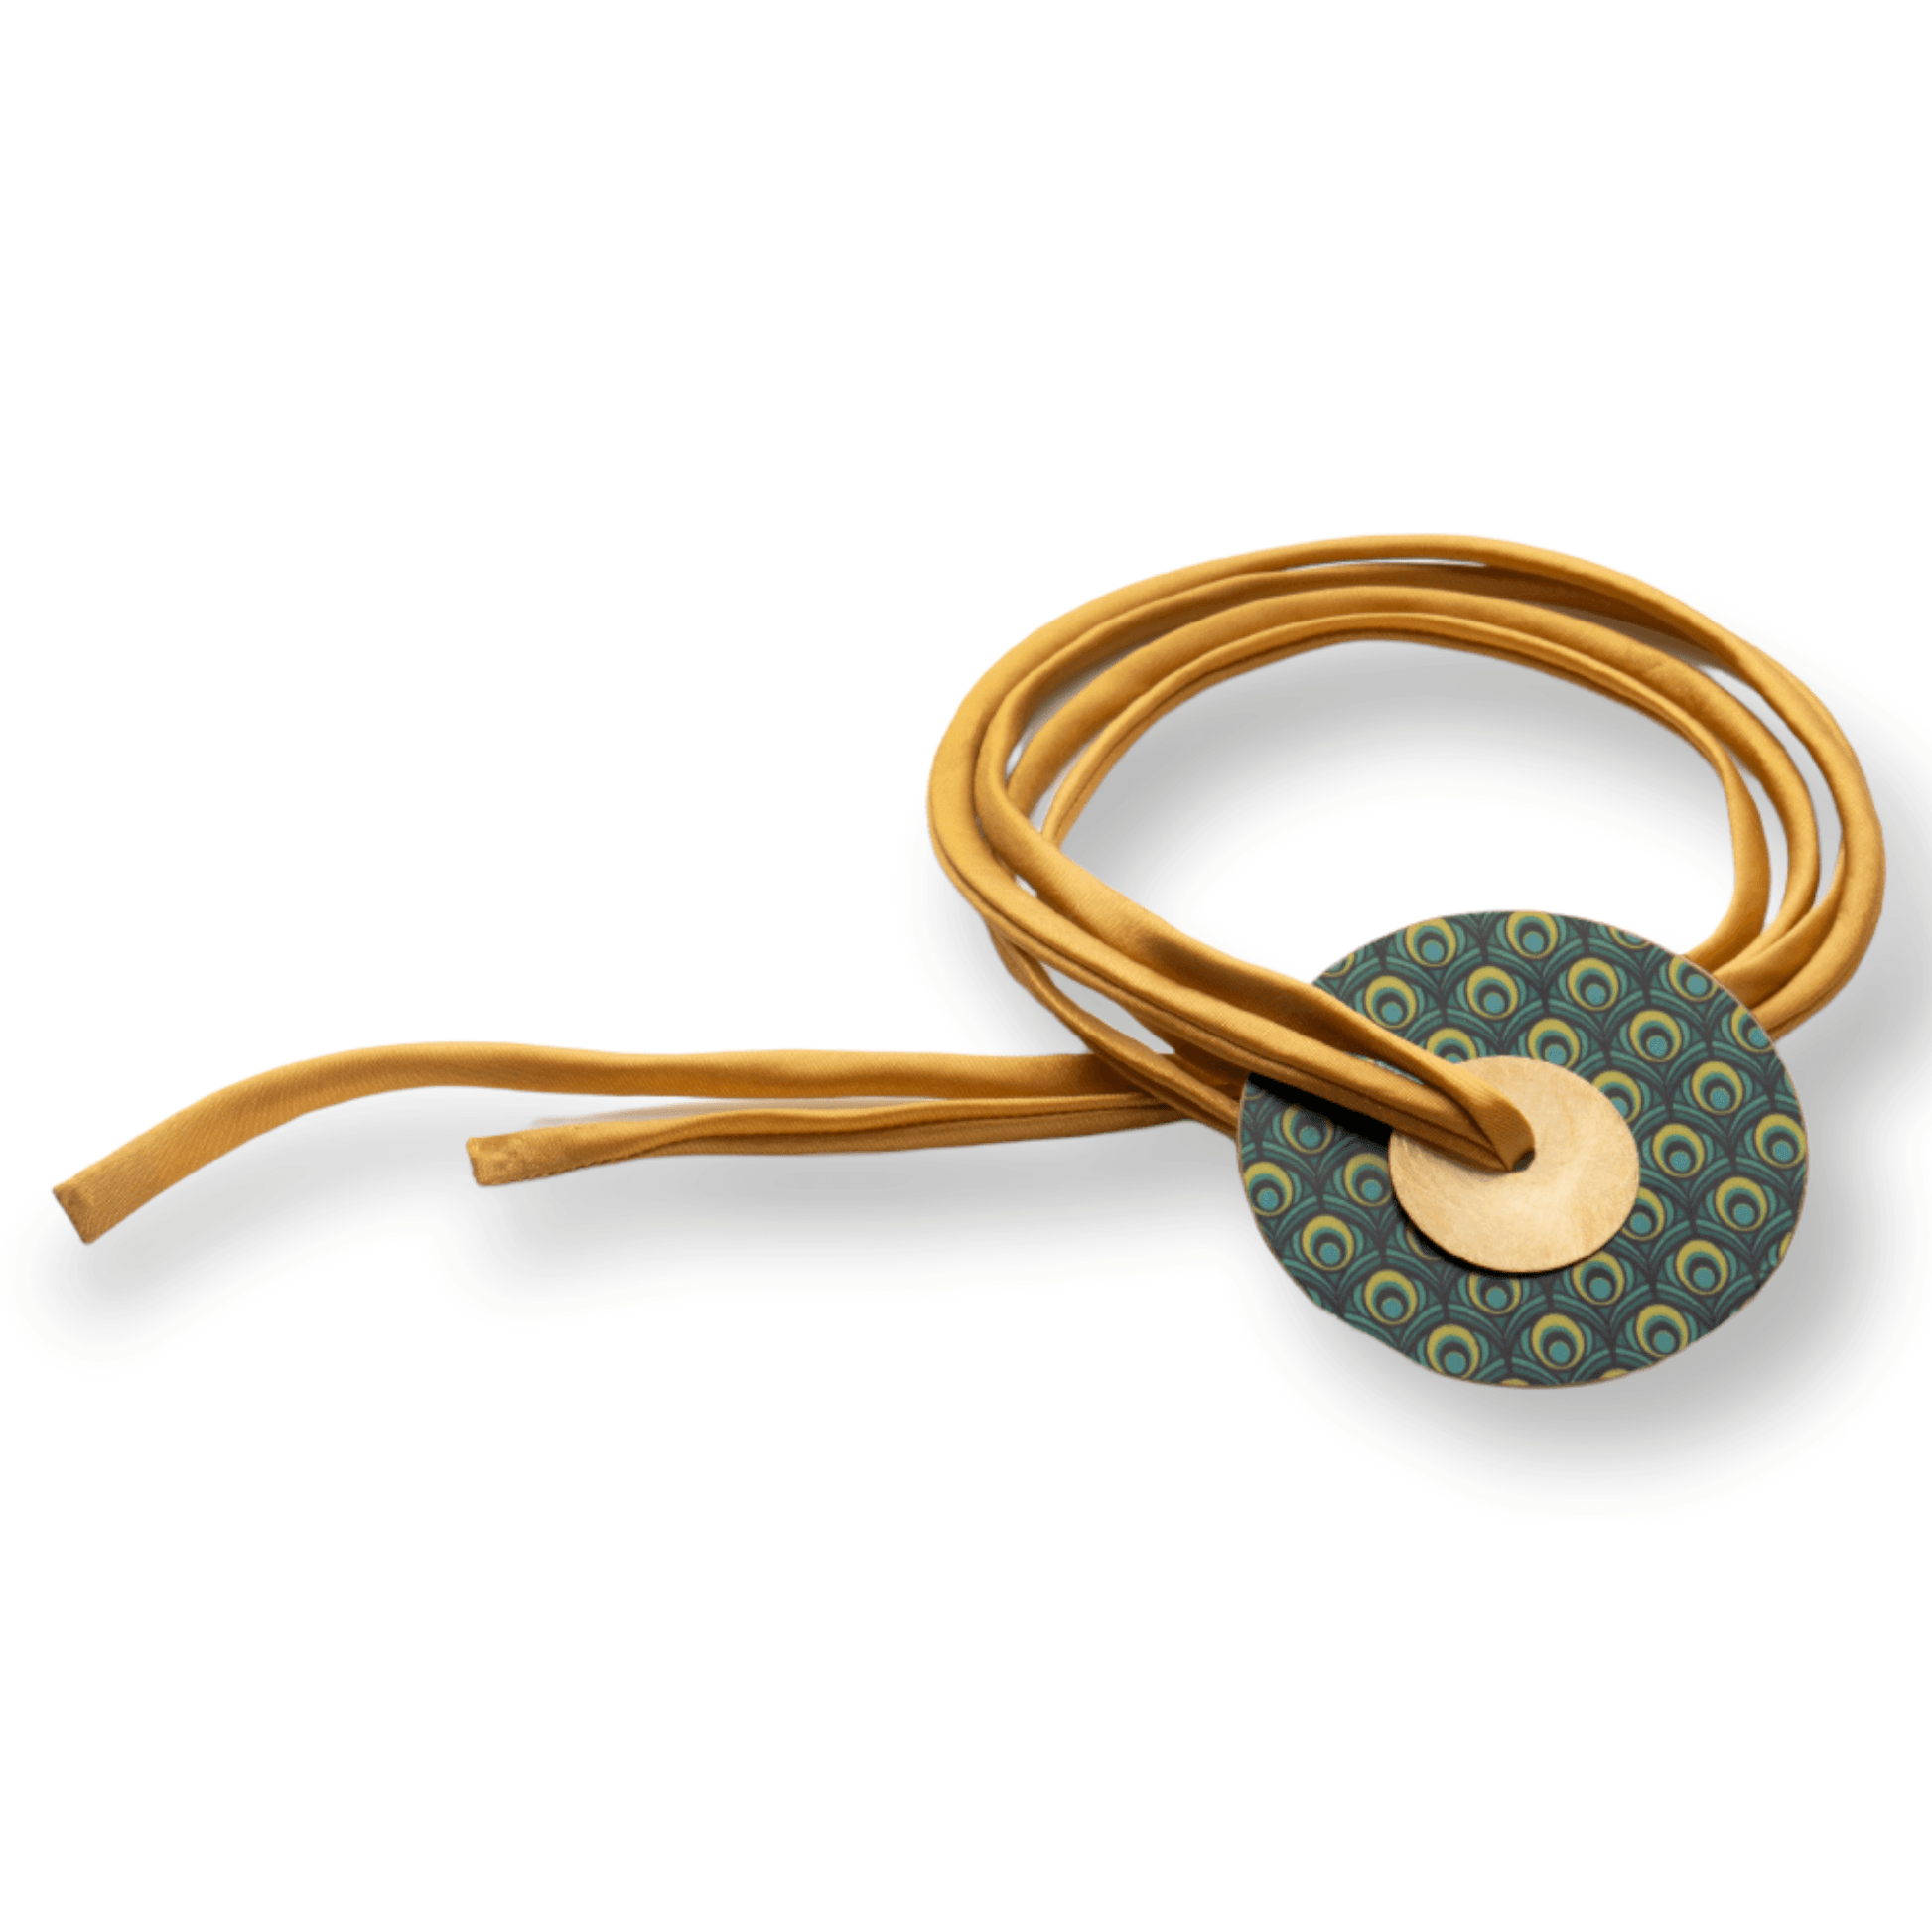 Global Inspired necklace belt combo - Sundara Joon